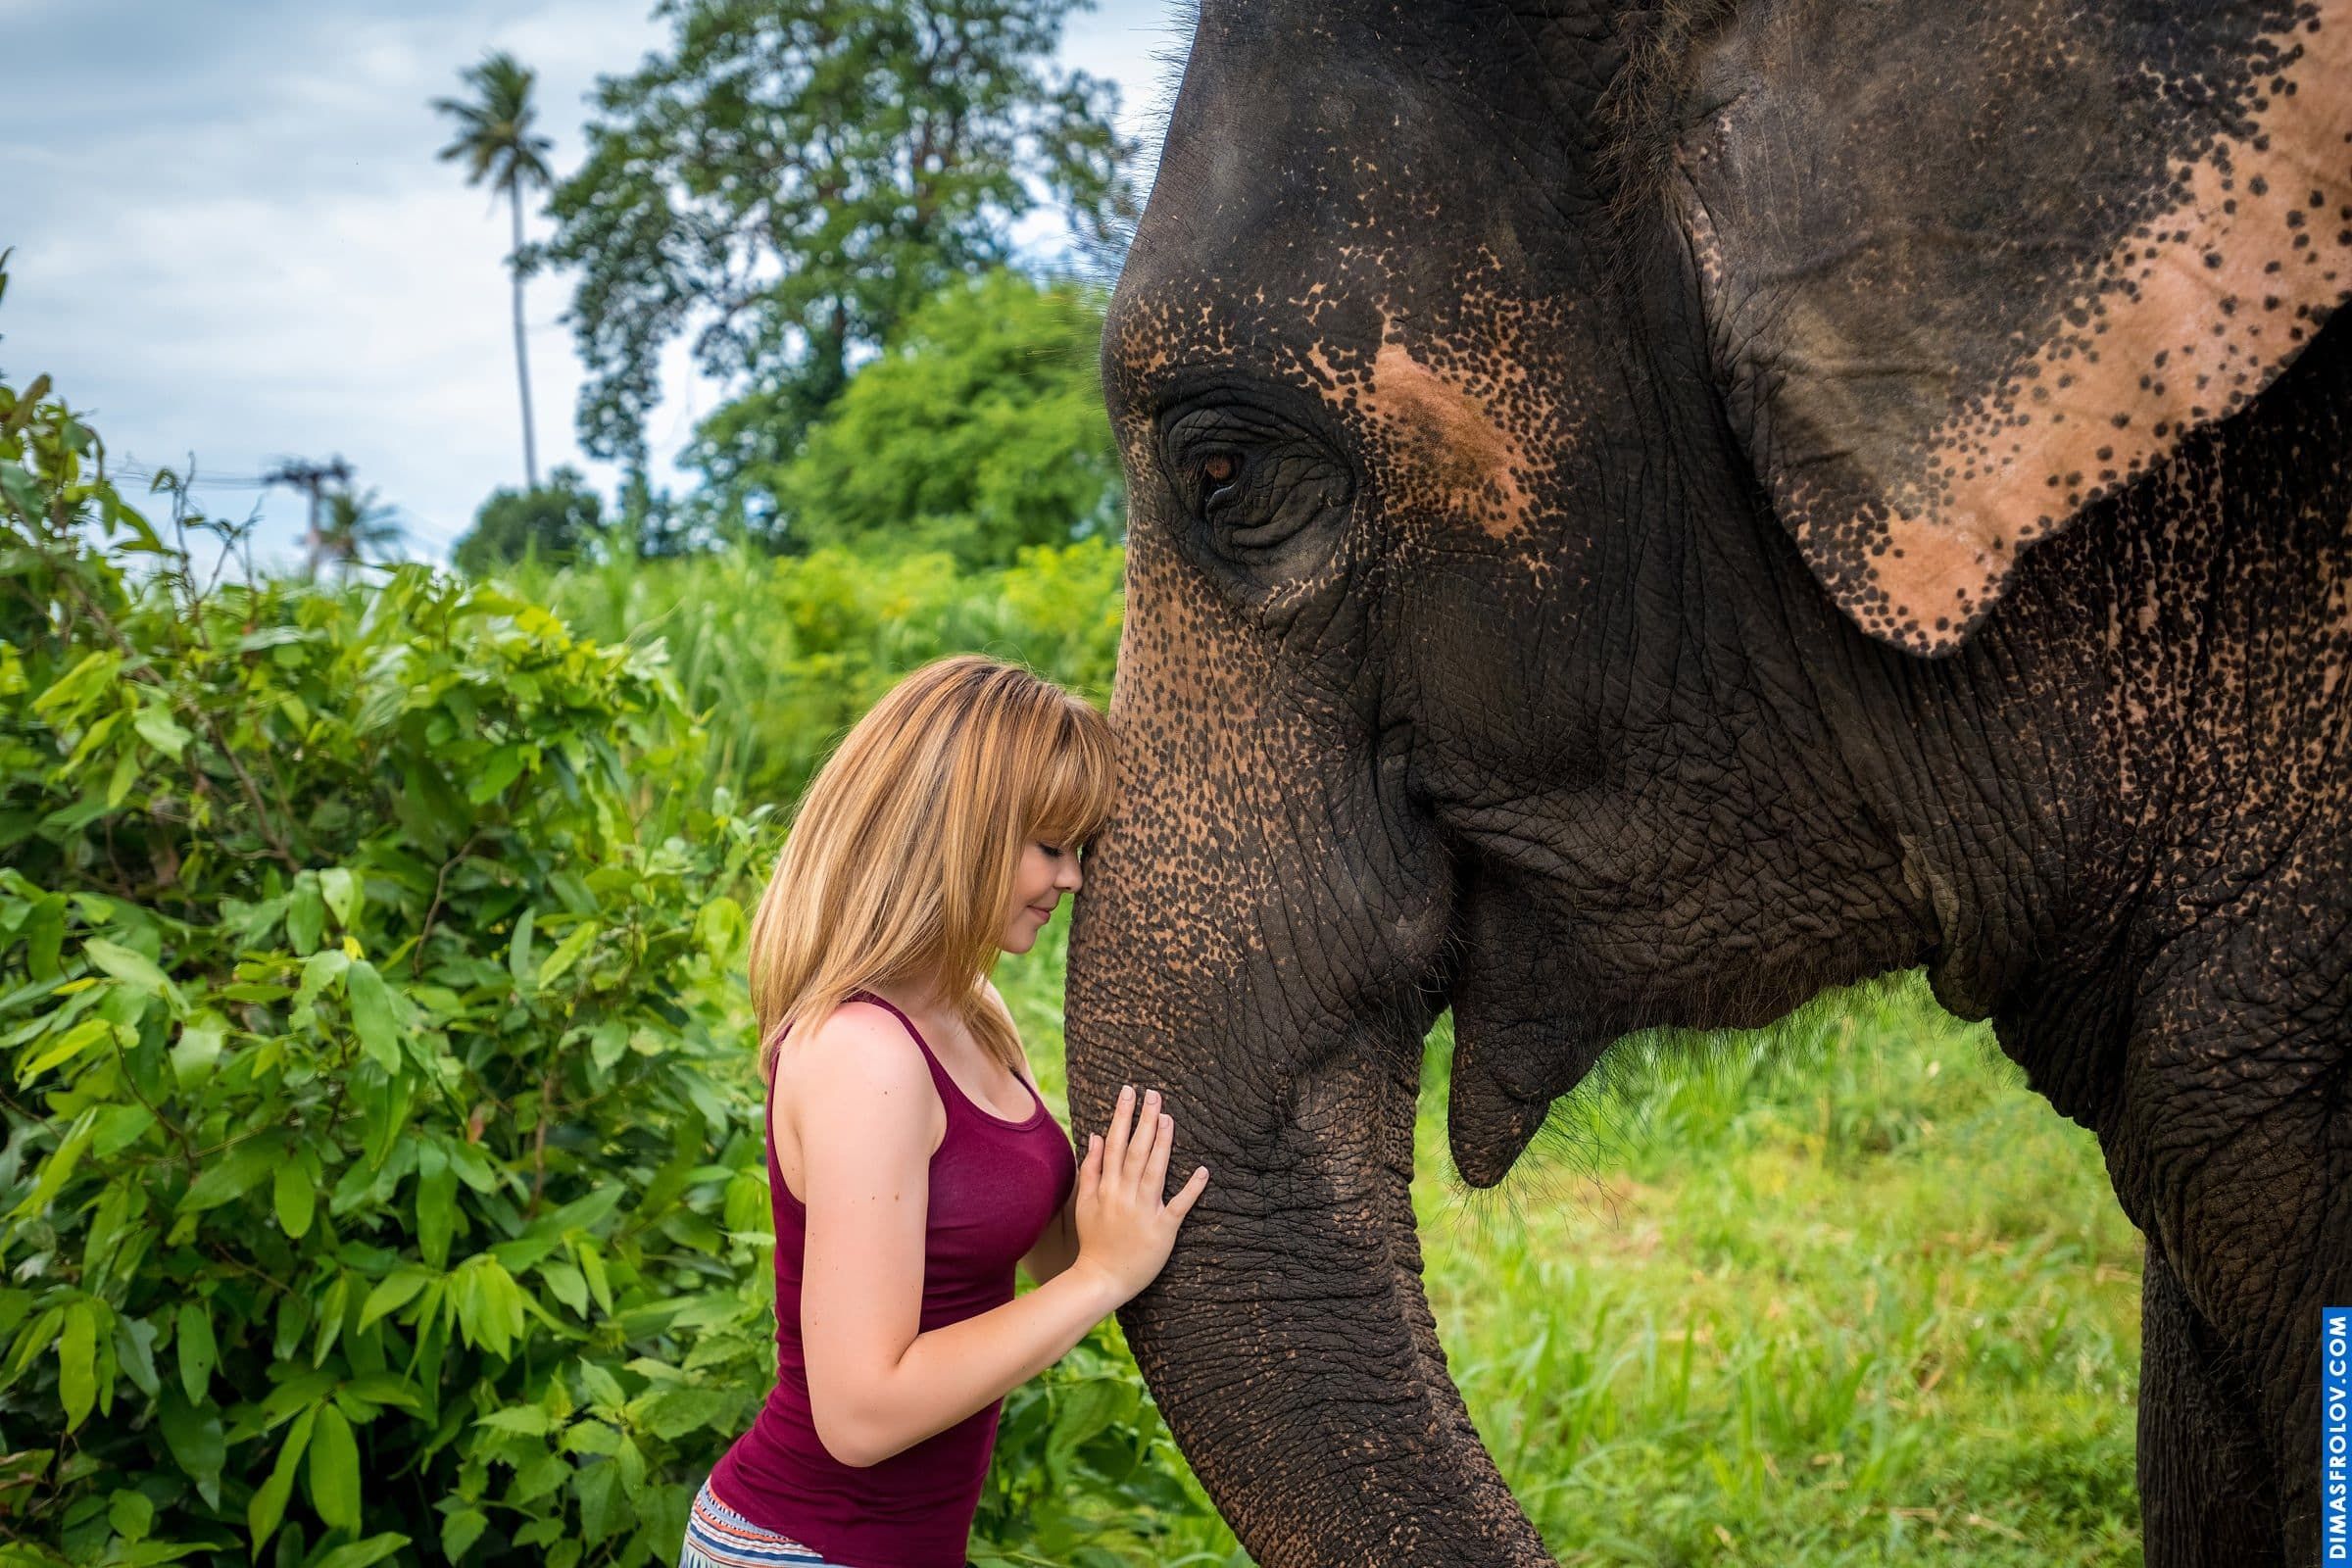 Photo shoot with an elephant on Koh Samui. photographer Dimas Frolov. photo1736